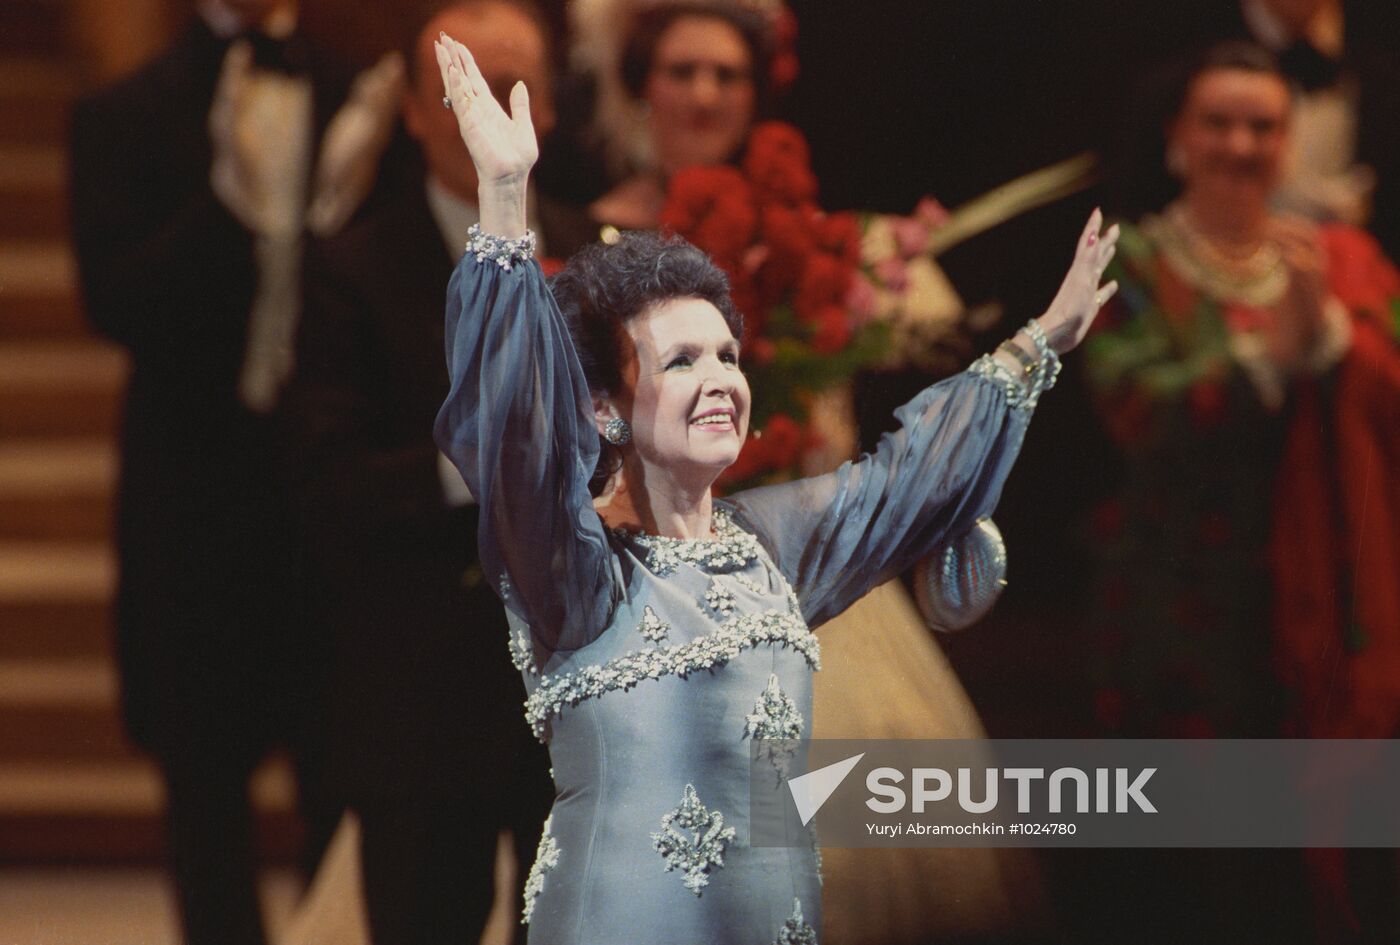 Opera singer Galina Vishnevskaya